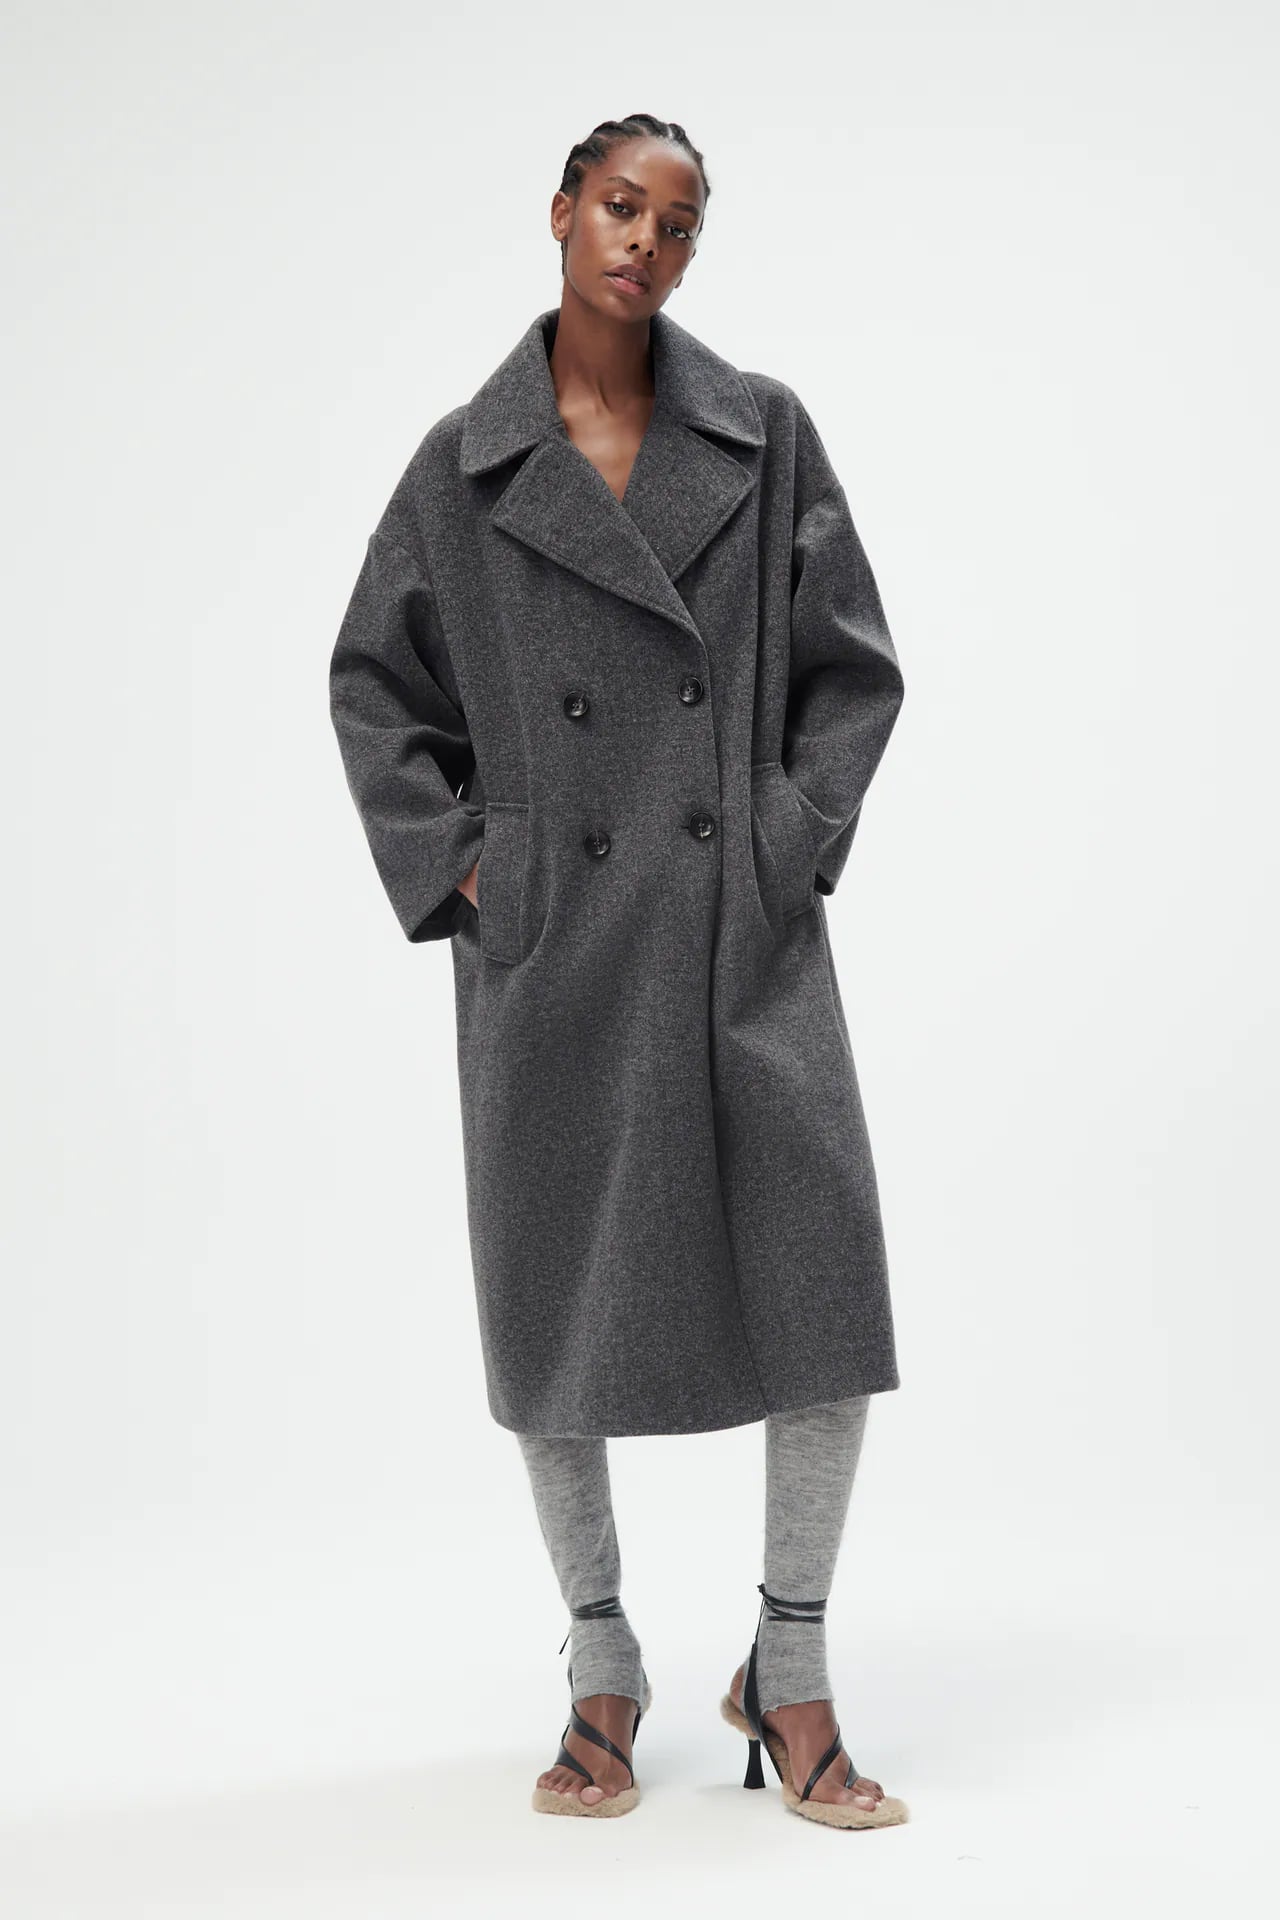 Zara Women Wool Blend Oversize Gray Coat Size M - munimoro.gob.pe